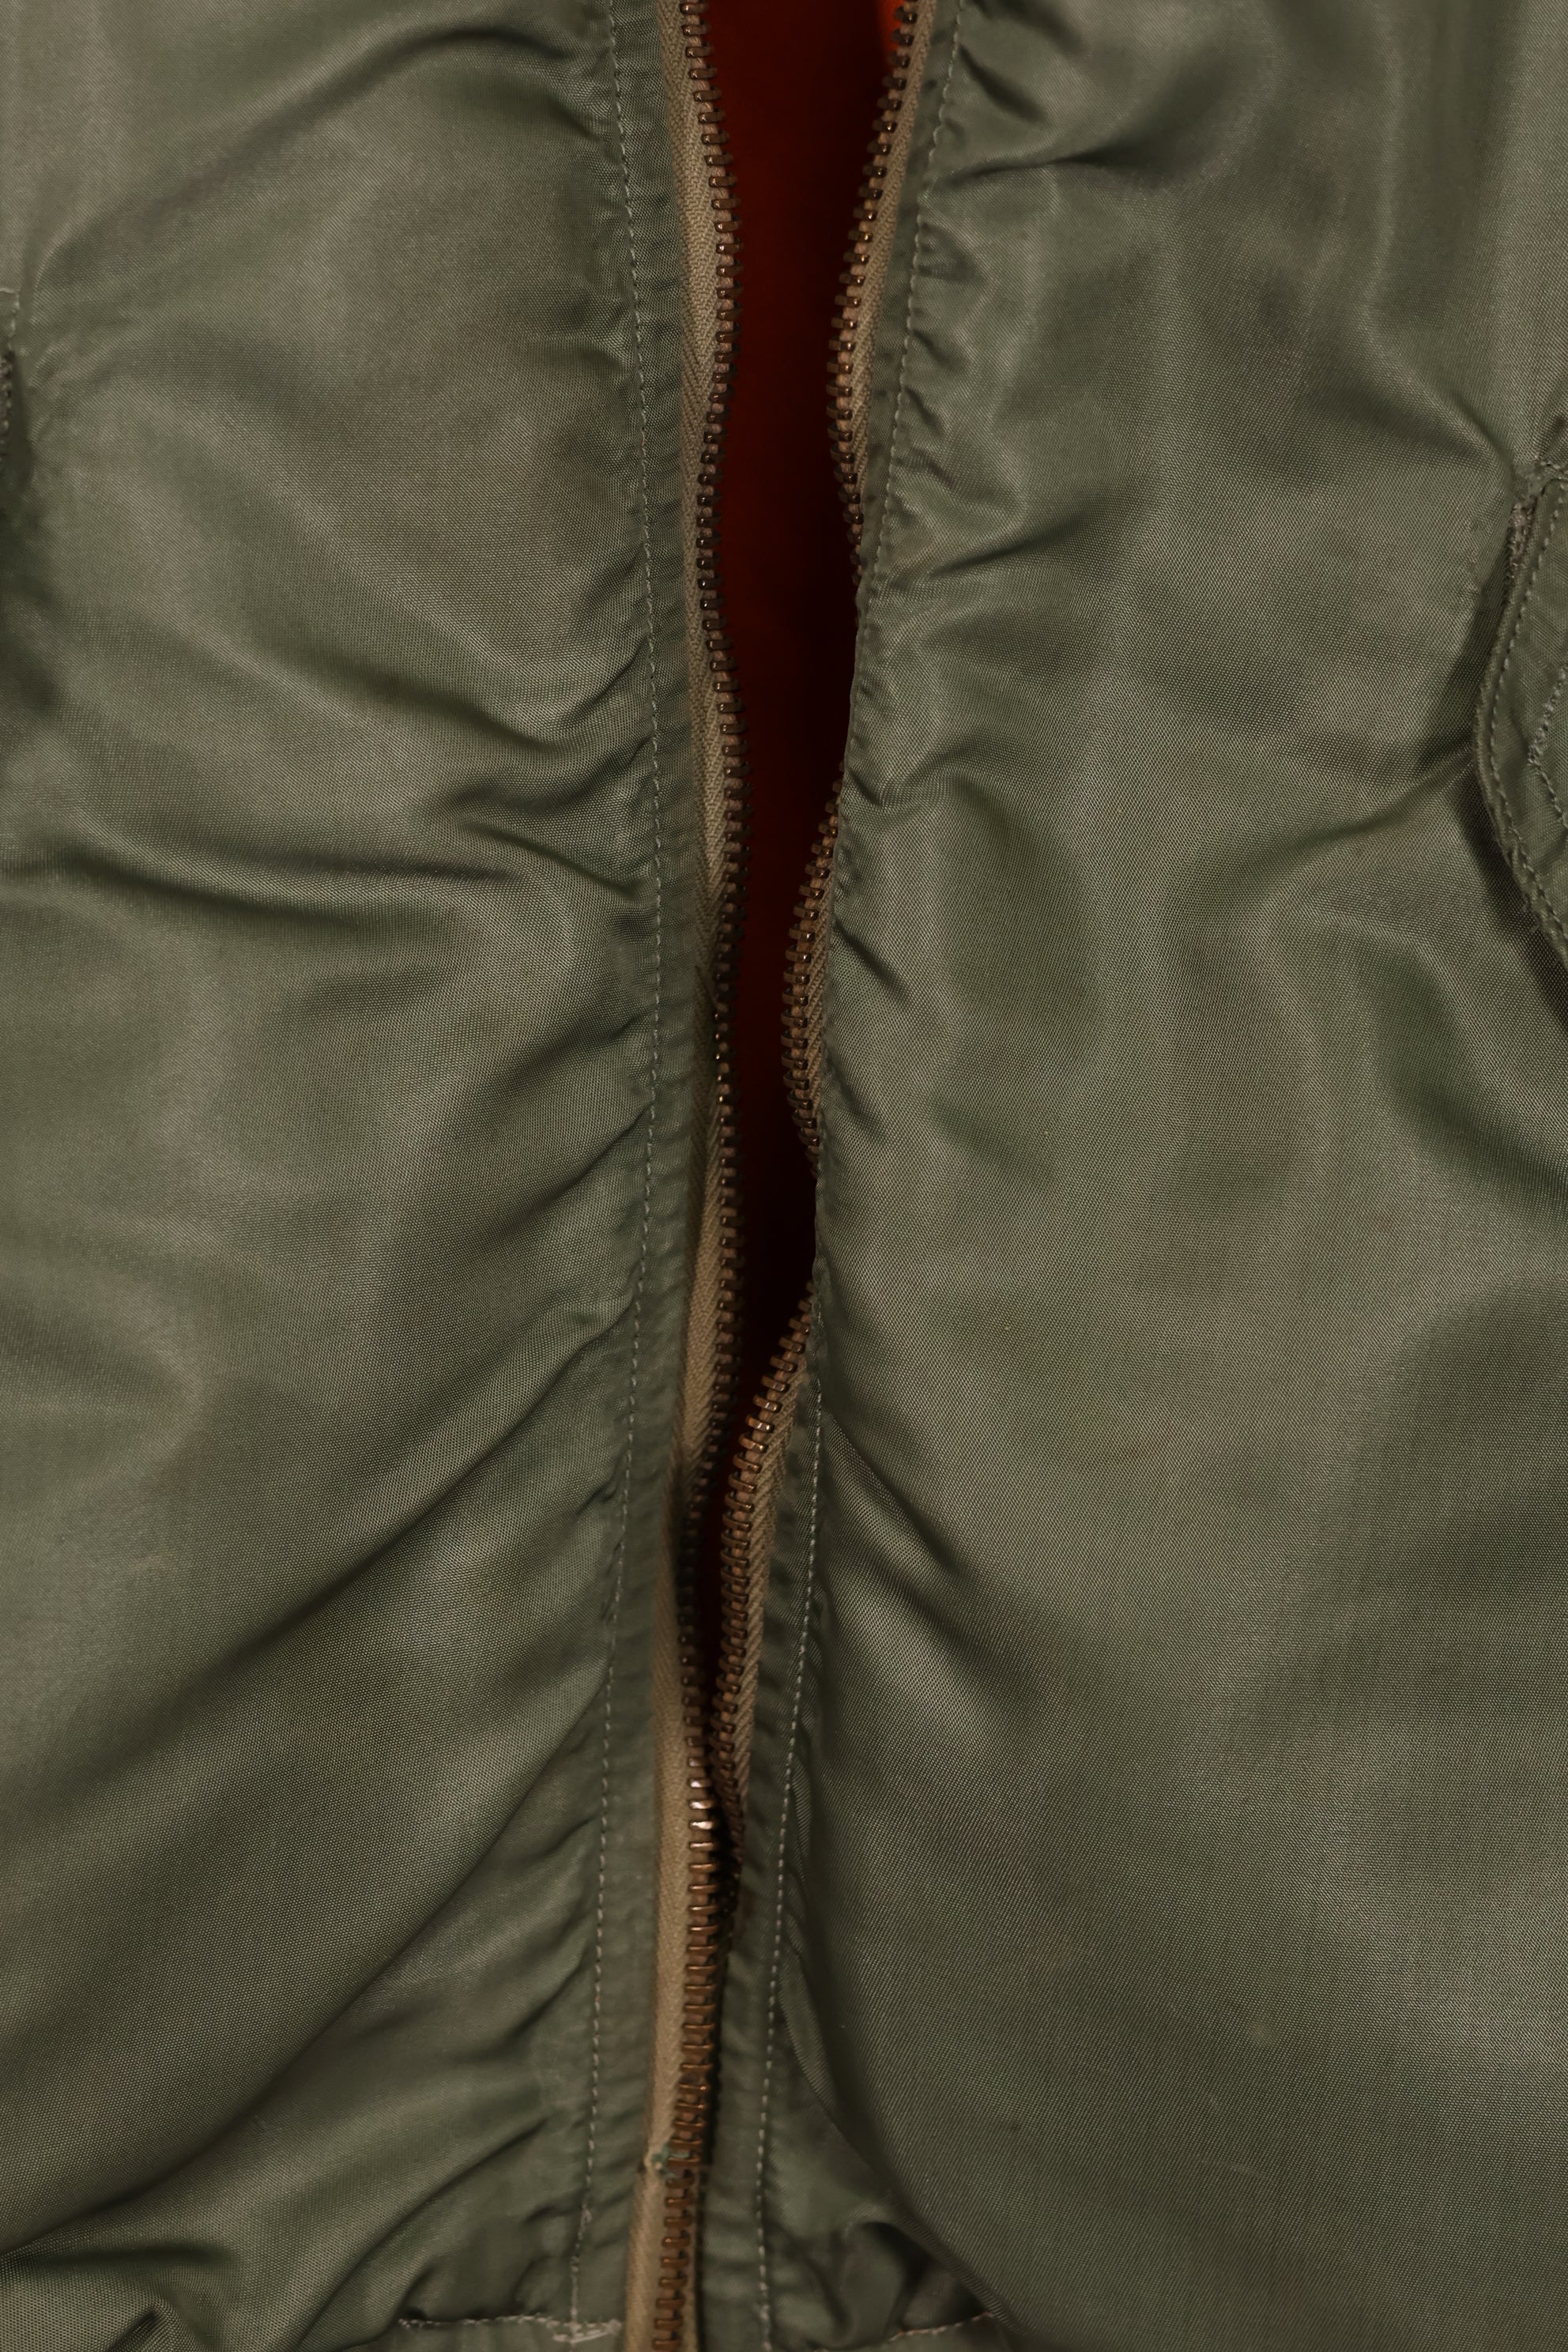 Real early 1960s USAF L2-B flight jacket with damaged ribs, no zipper slider